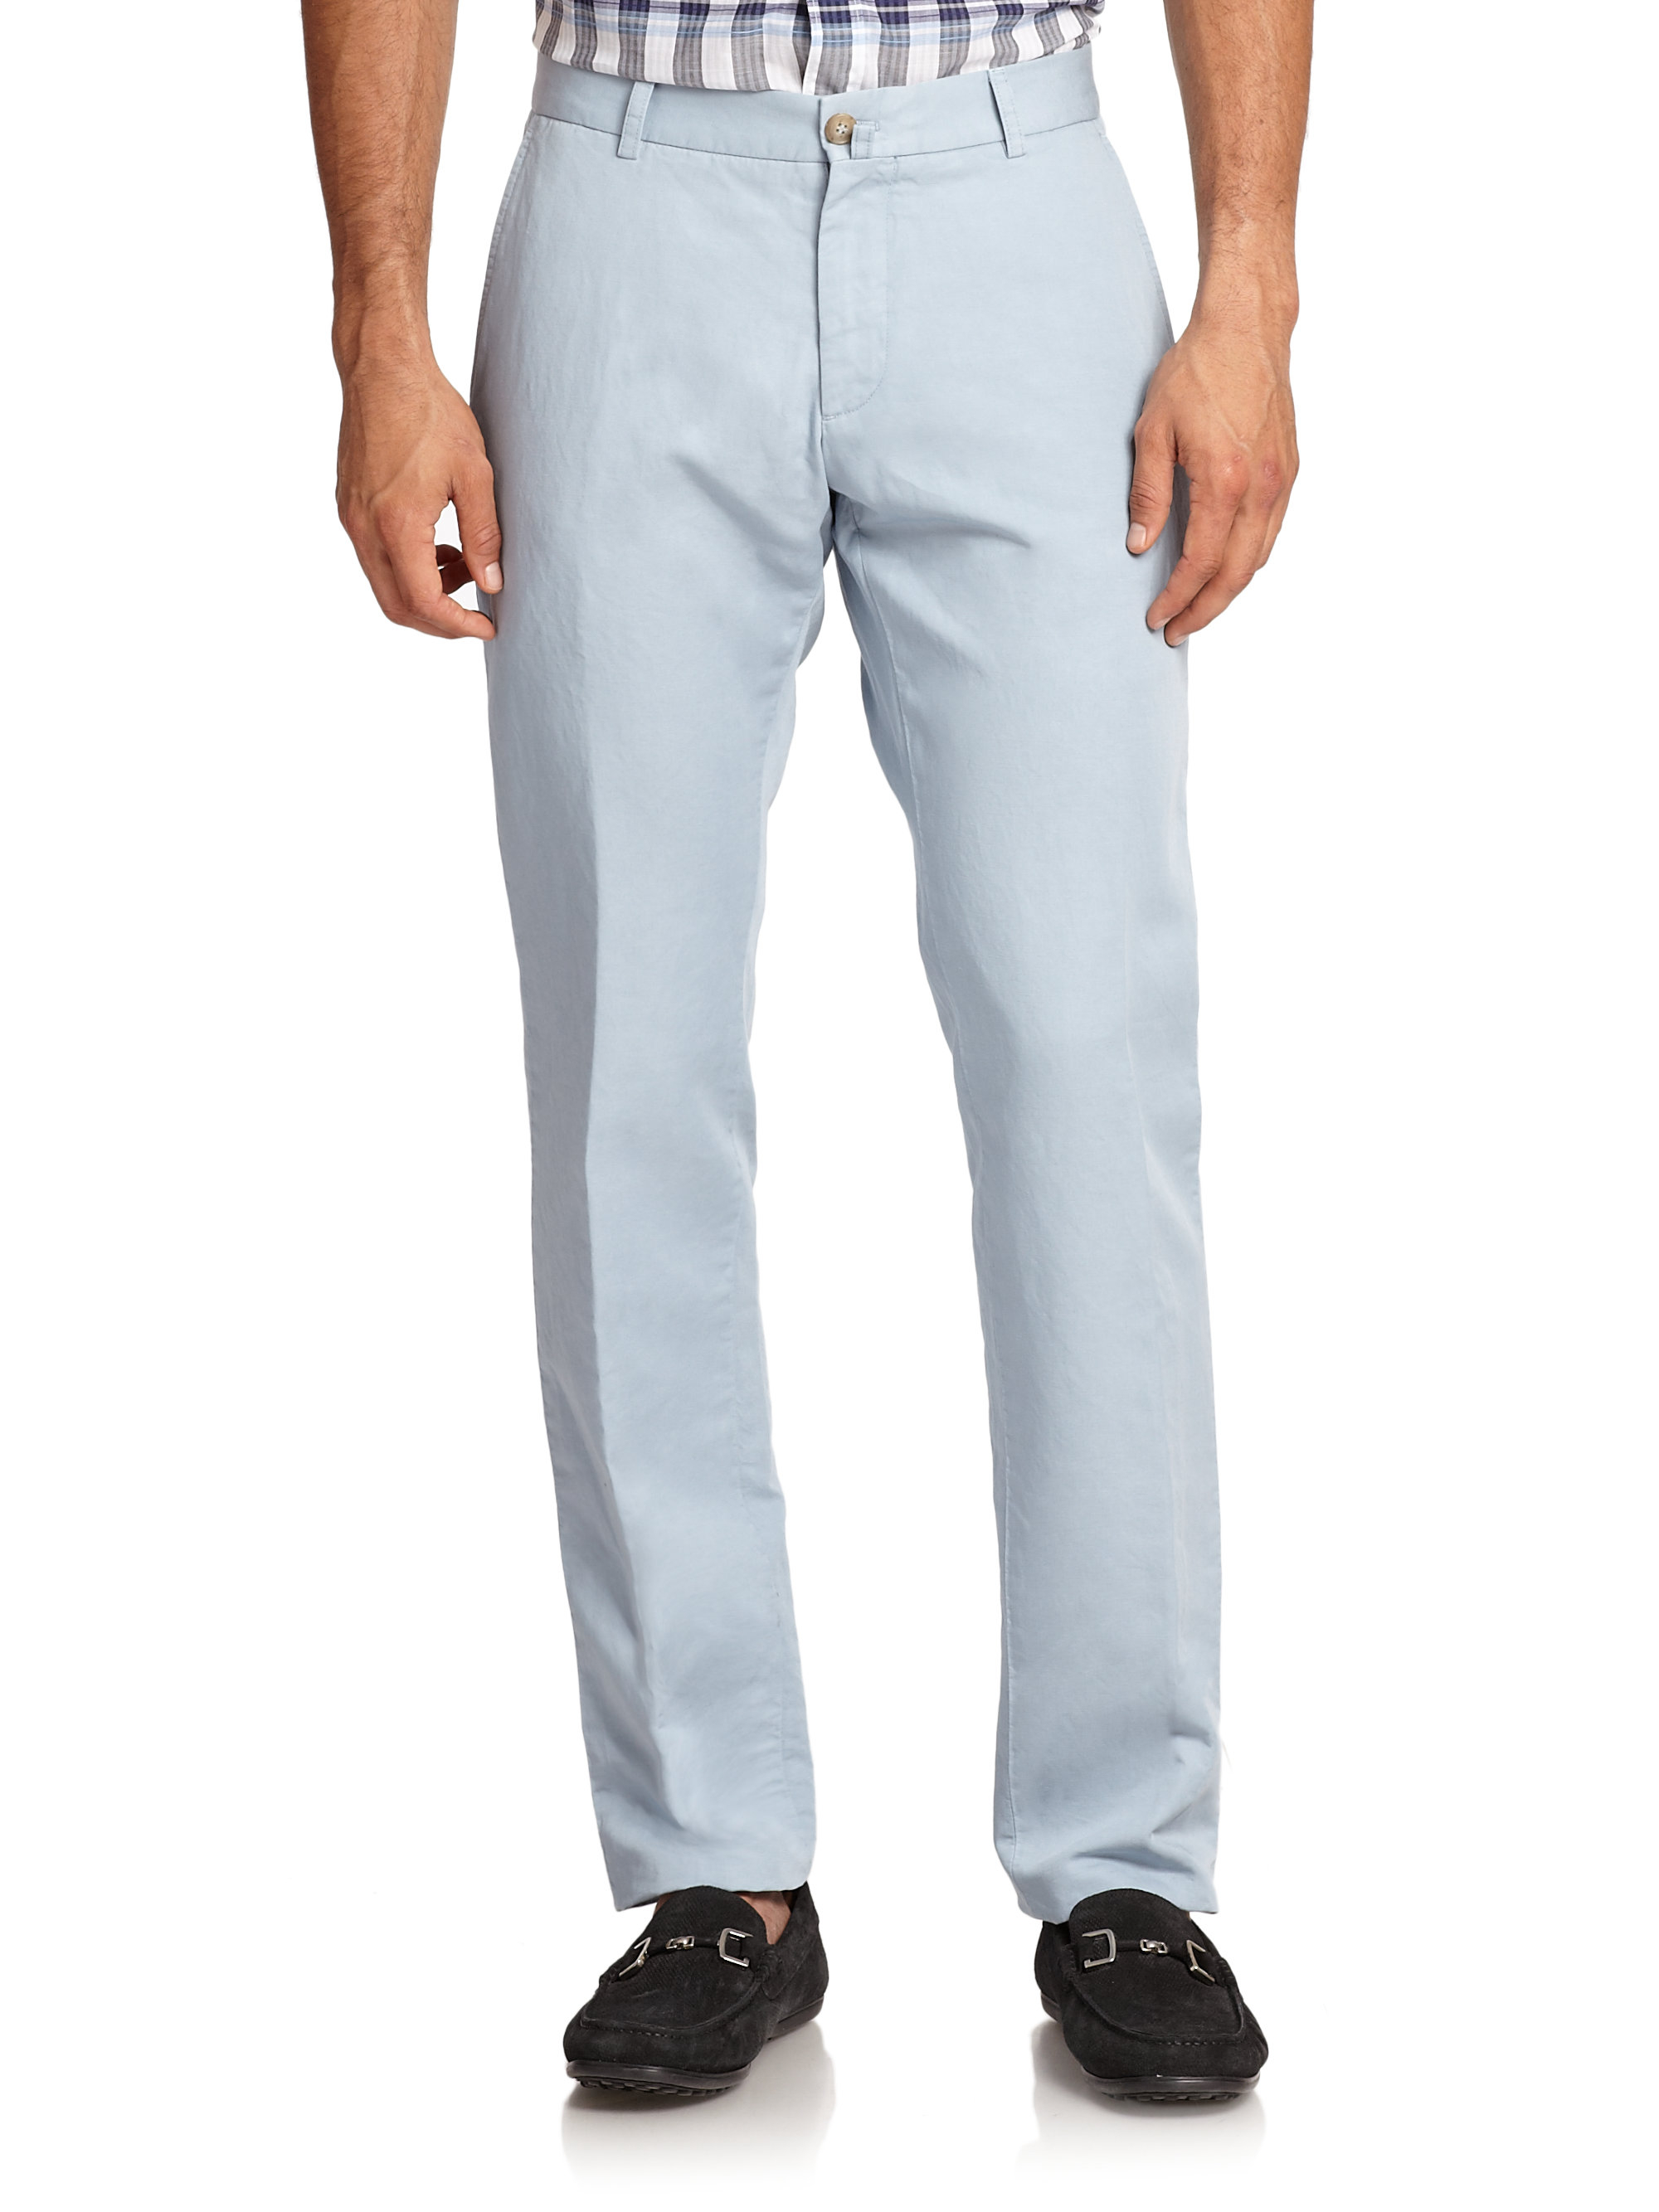 Lyst - Façonnable Cotton & Linen Pastel Chino Pants in Blue for Men